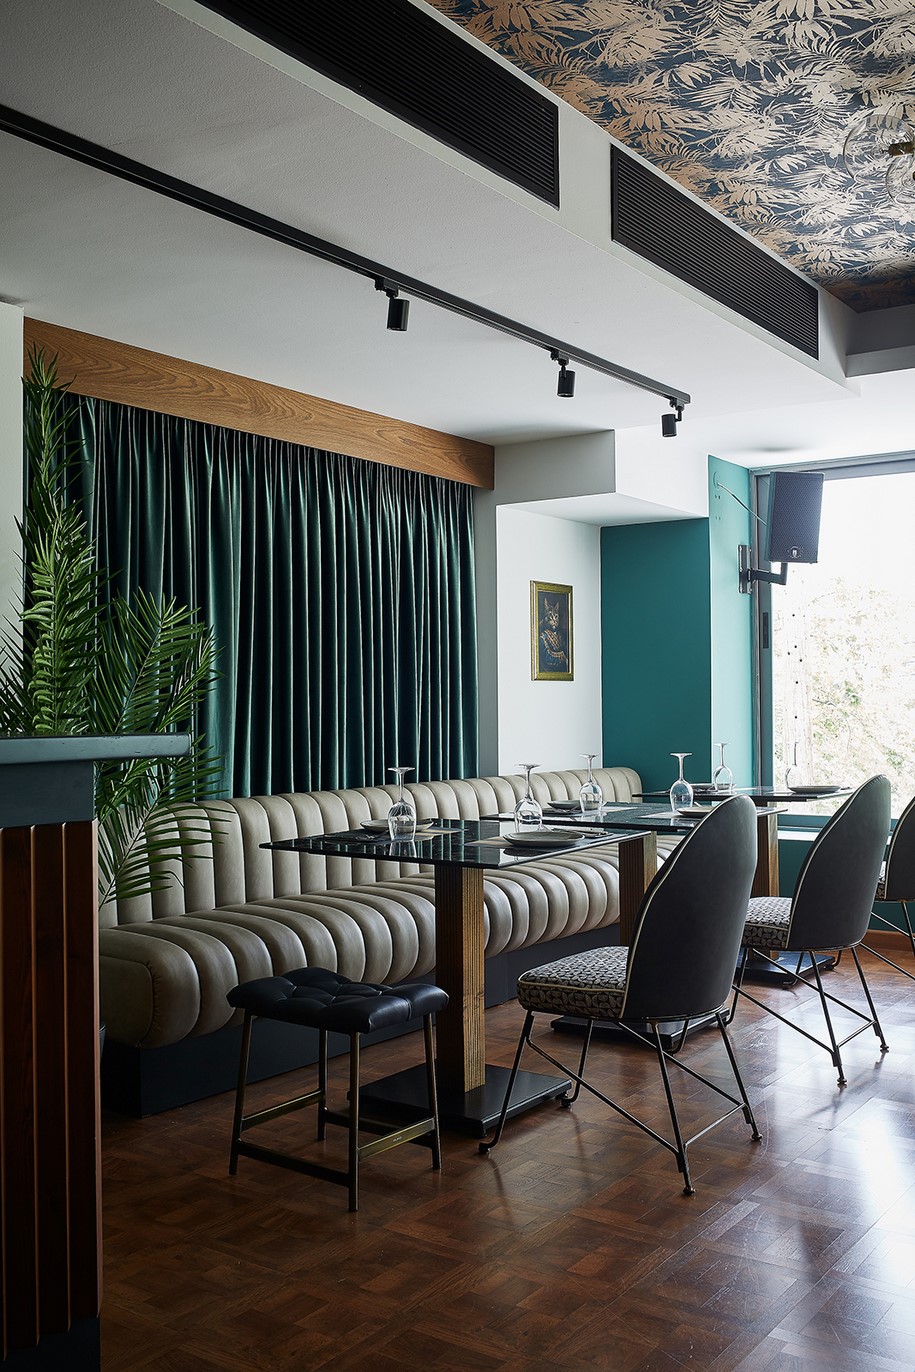 Archisearch G2lab architects designed Eleven bar restaurant in Arta